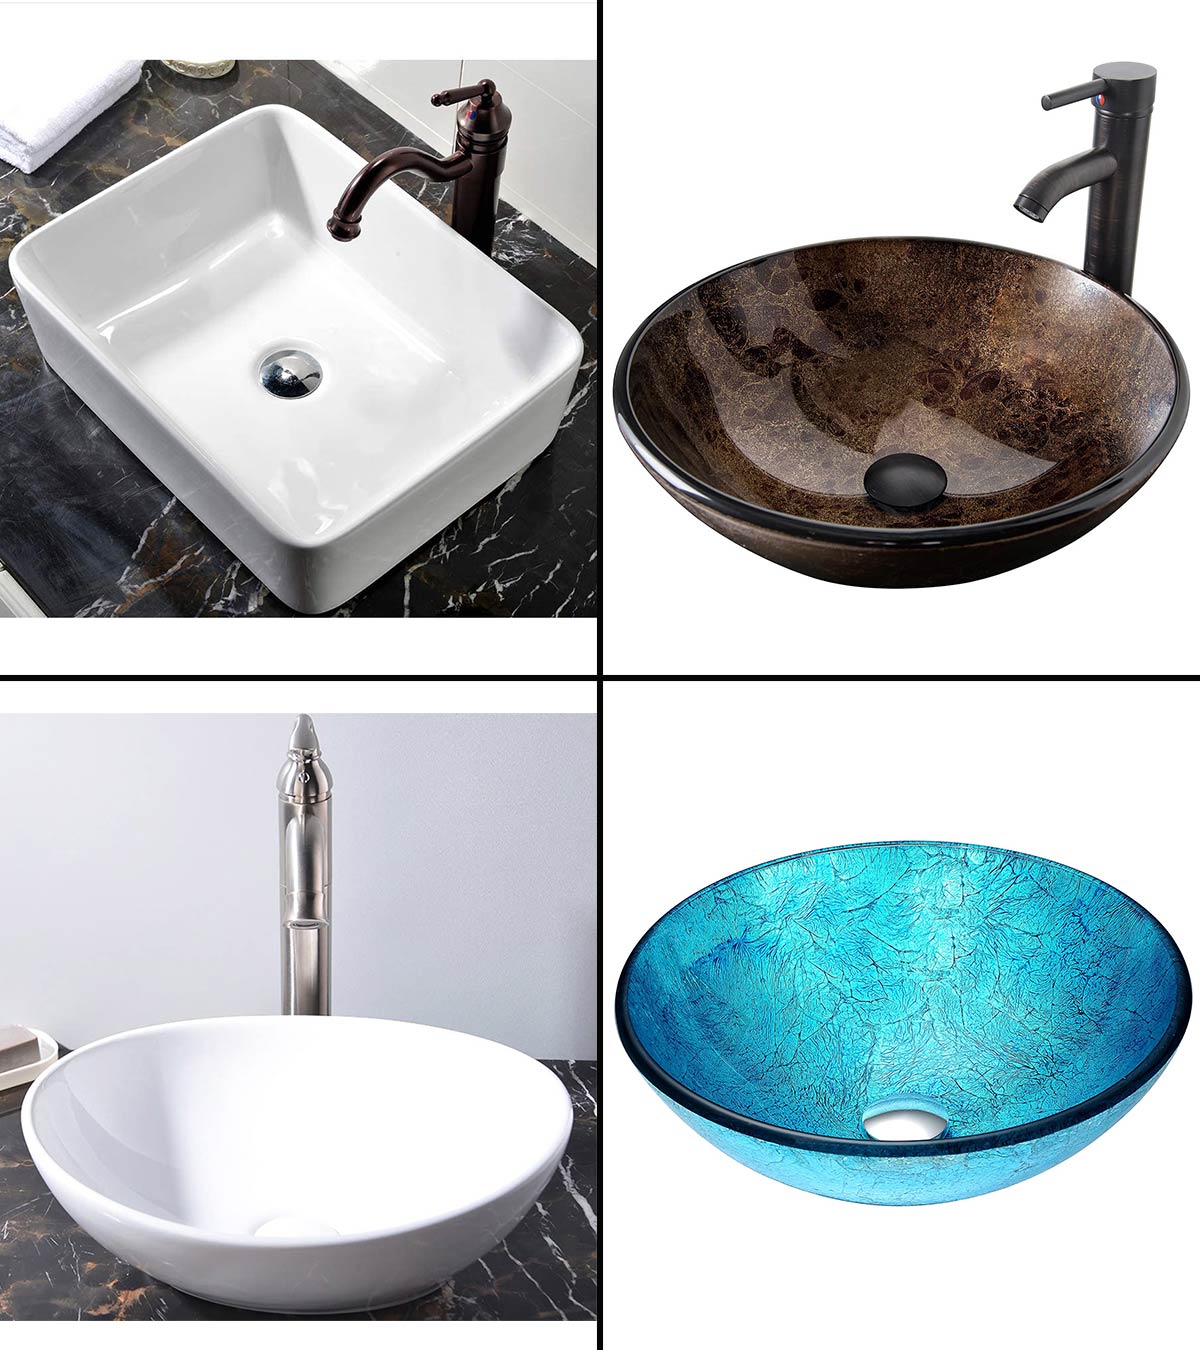 https://www.momjunction.com/wp-content/uploads/2021/02/13-Best-Bathroom-Sinks-In-20211-1.jpg